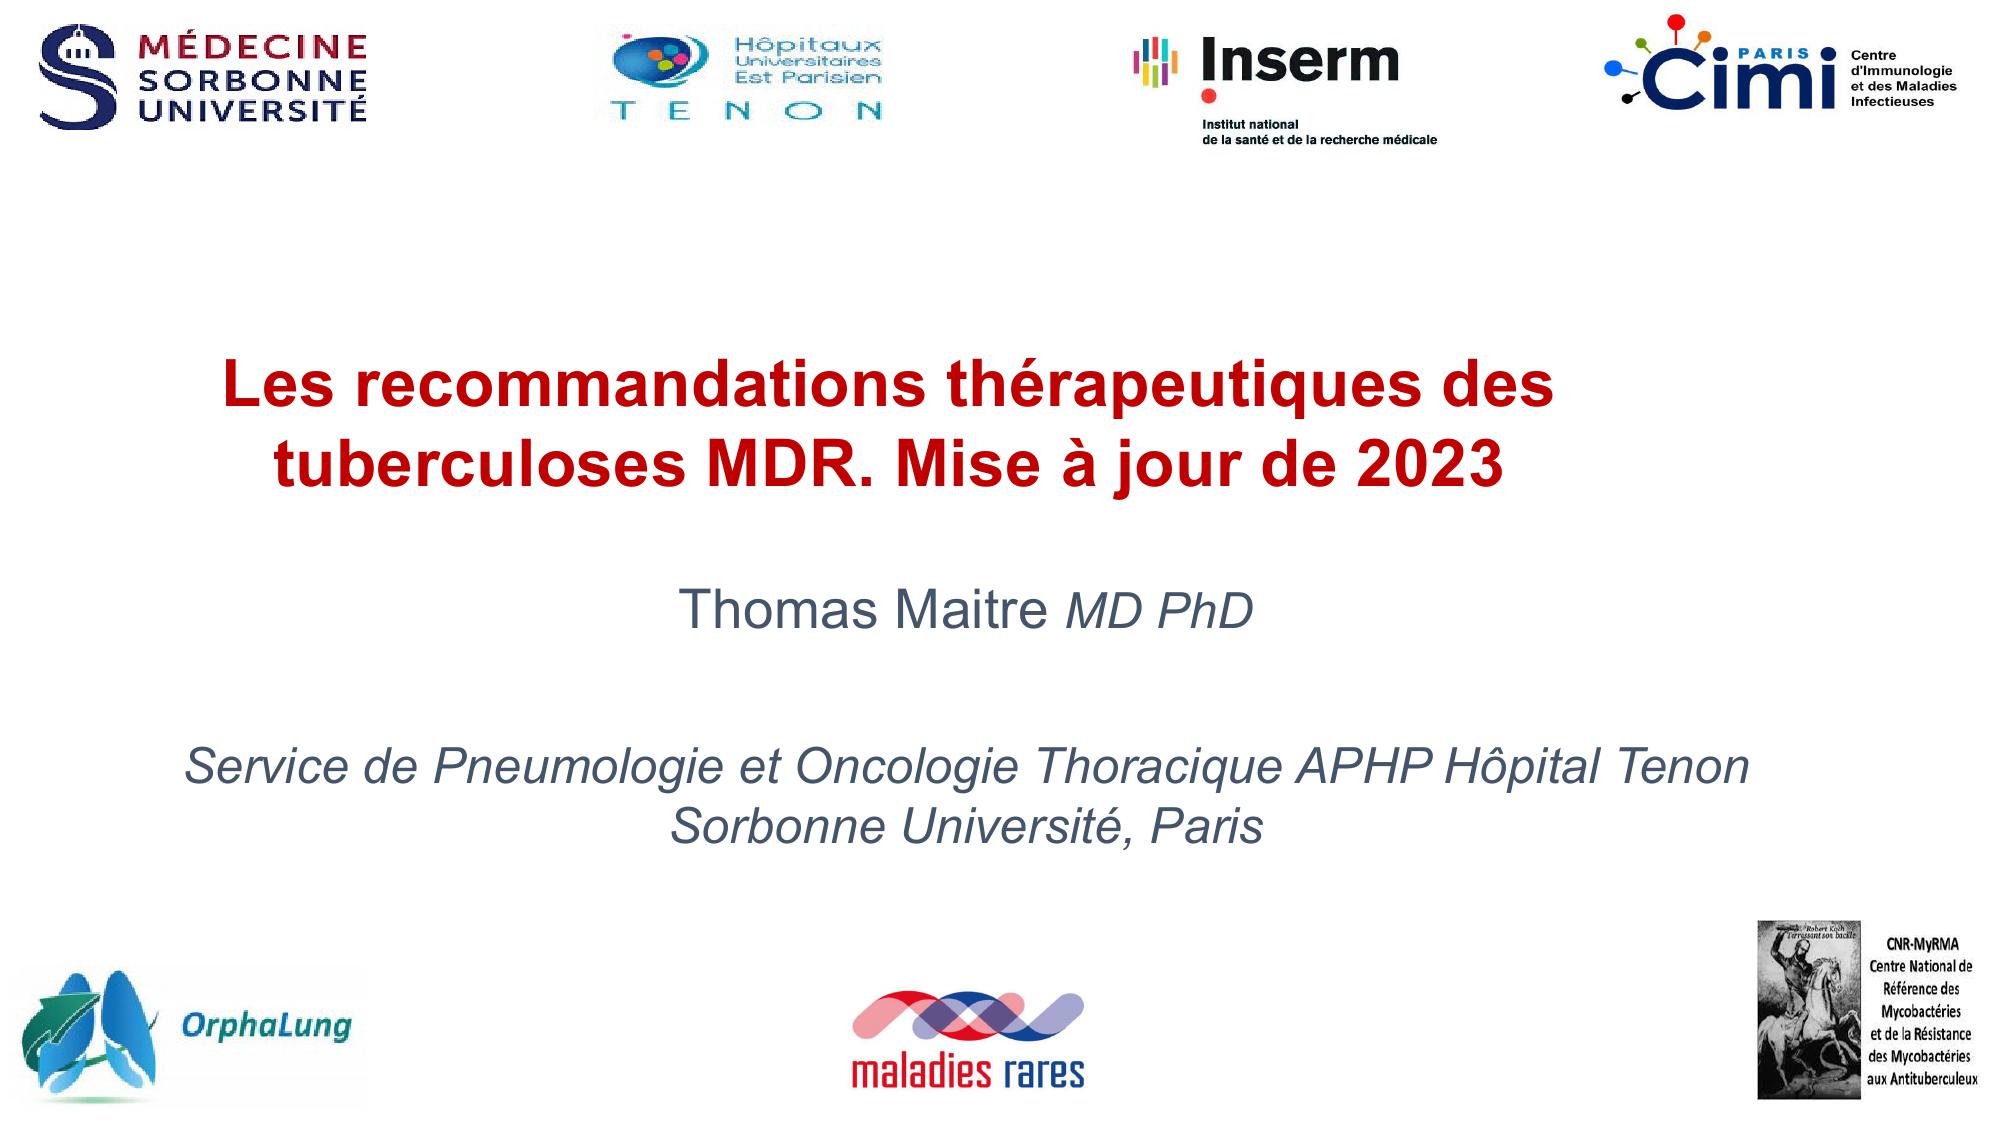 Les recommandations thérapeutiques des tuberculoses MDR en 2023. Thomas Maitre